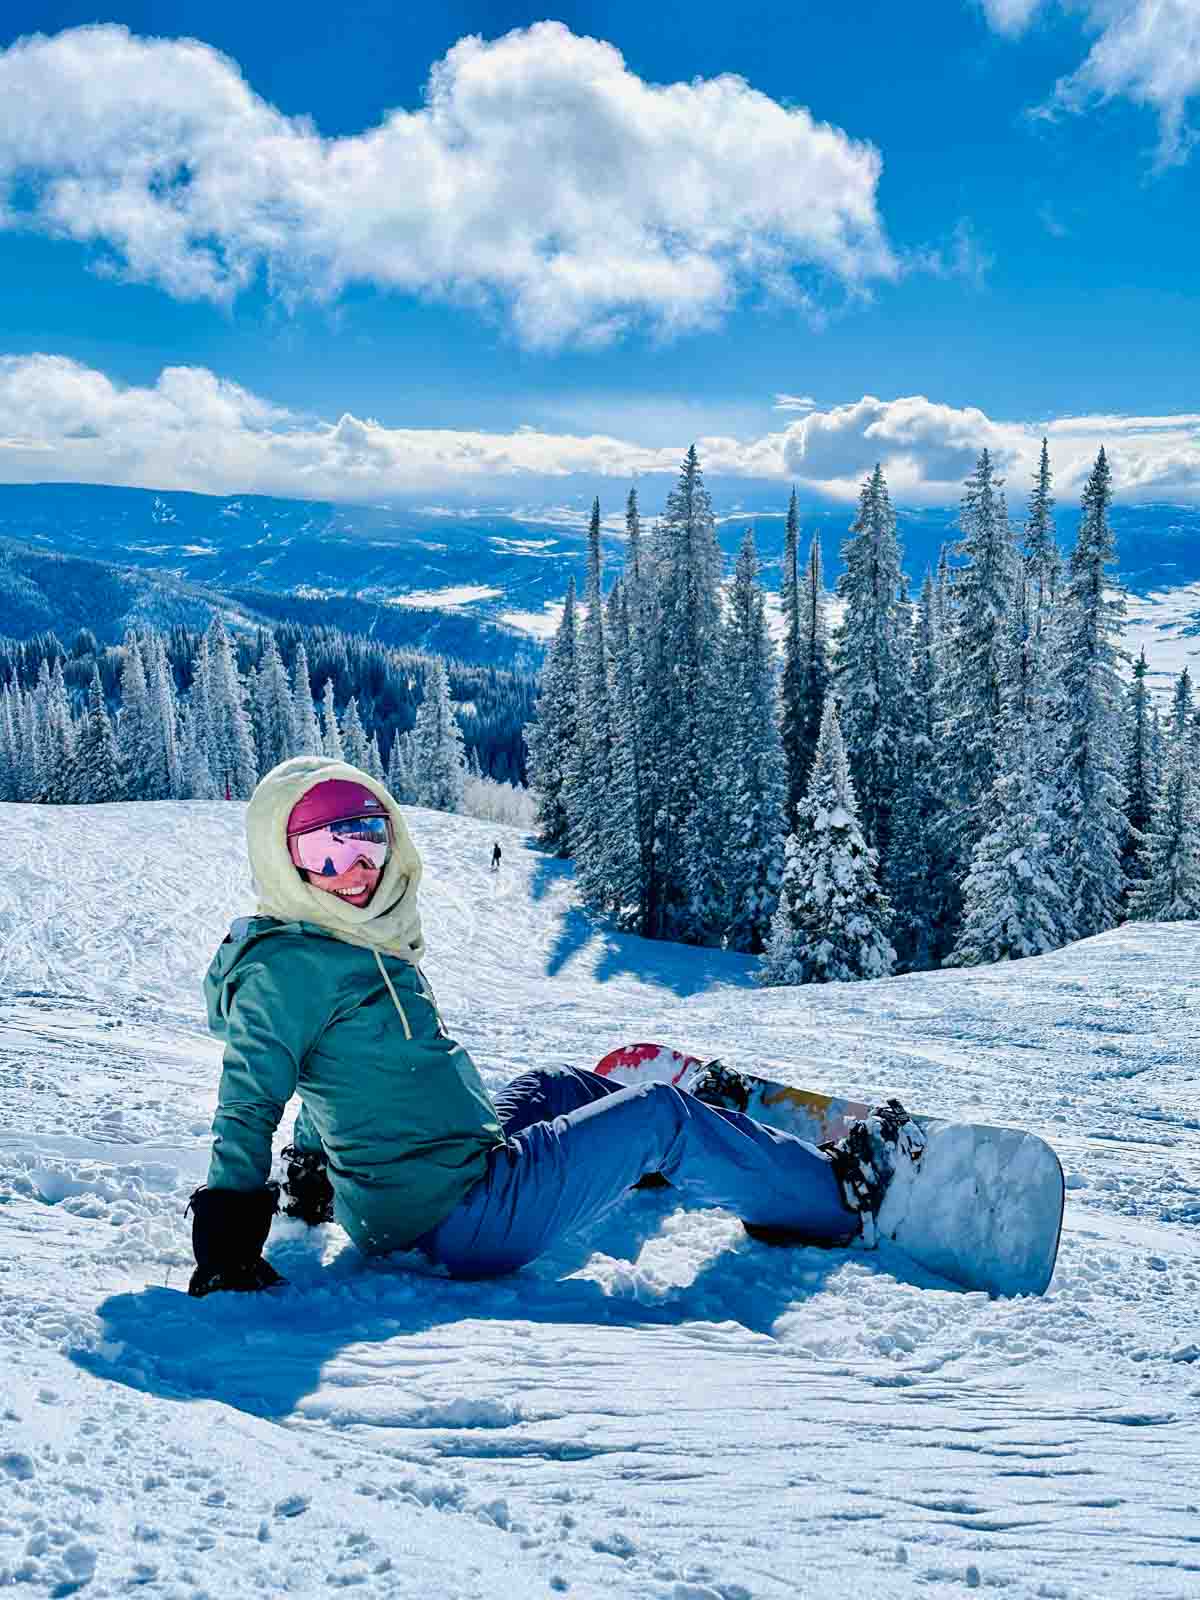 melissa erdelac on a snowboard